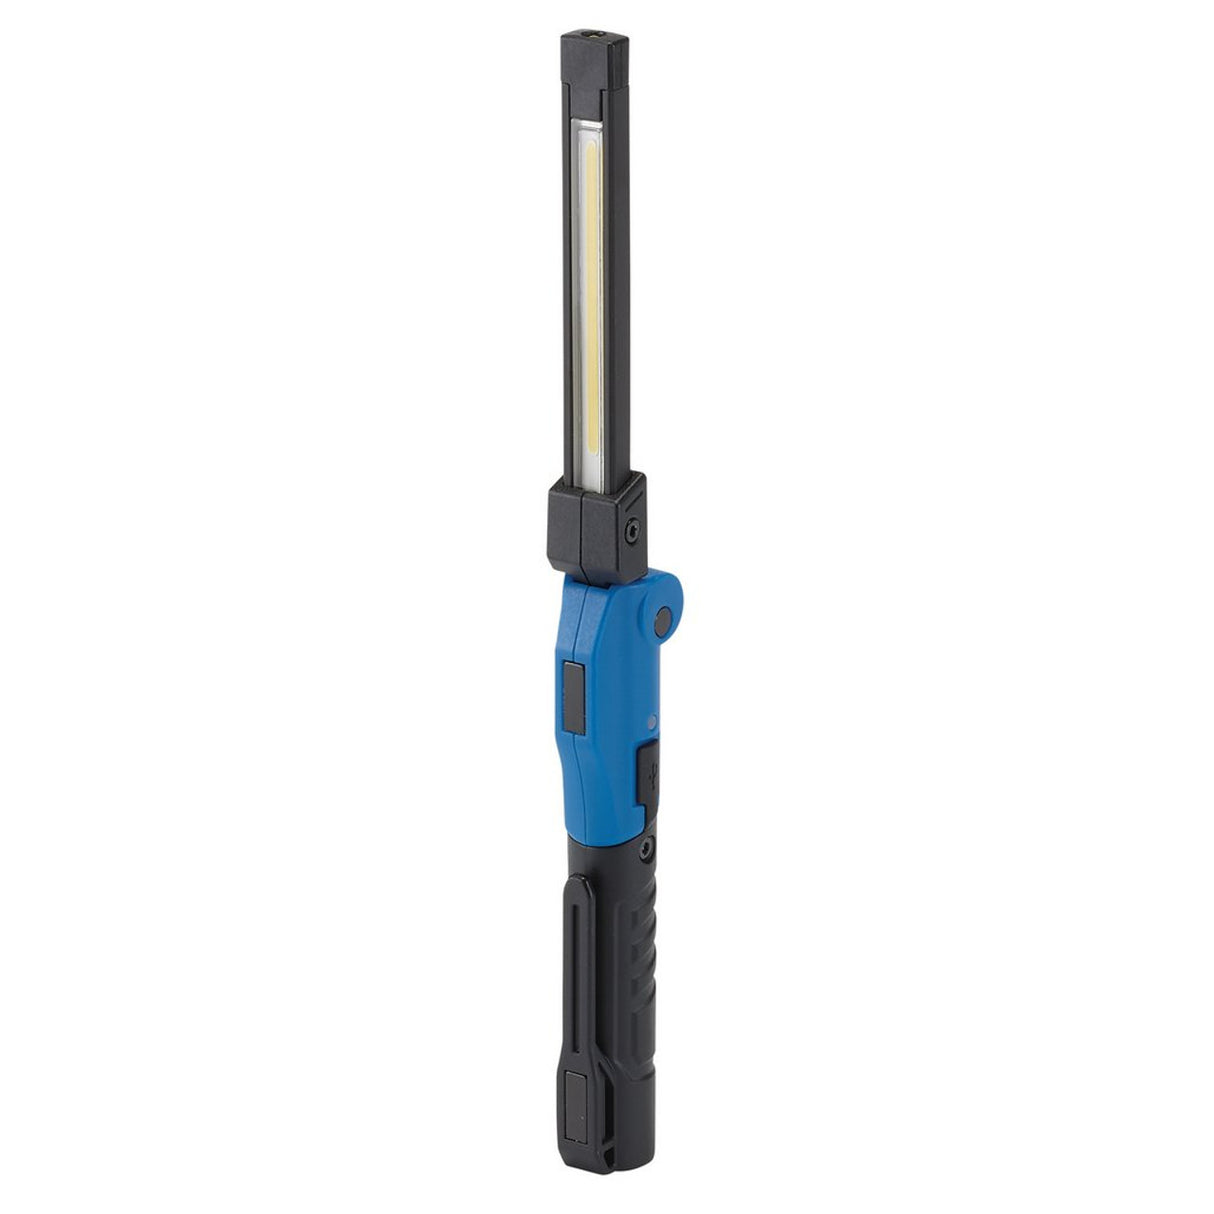 Draper Tools Cob Smd Led Rechargeable Pocket Folding Slim Light, 100 Lumens, 1 x Usb-C Cable